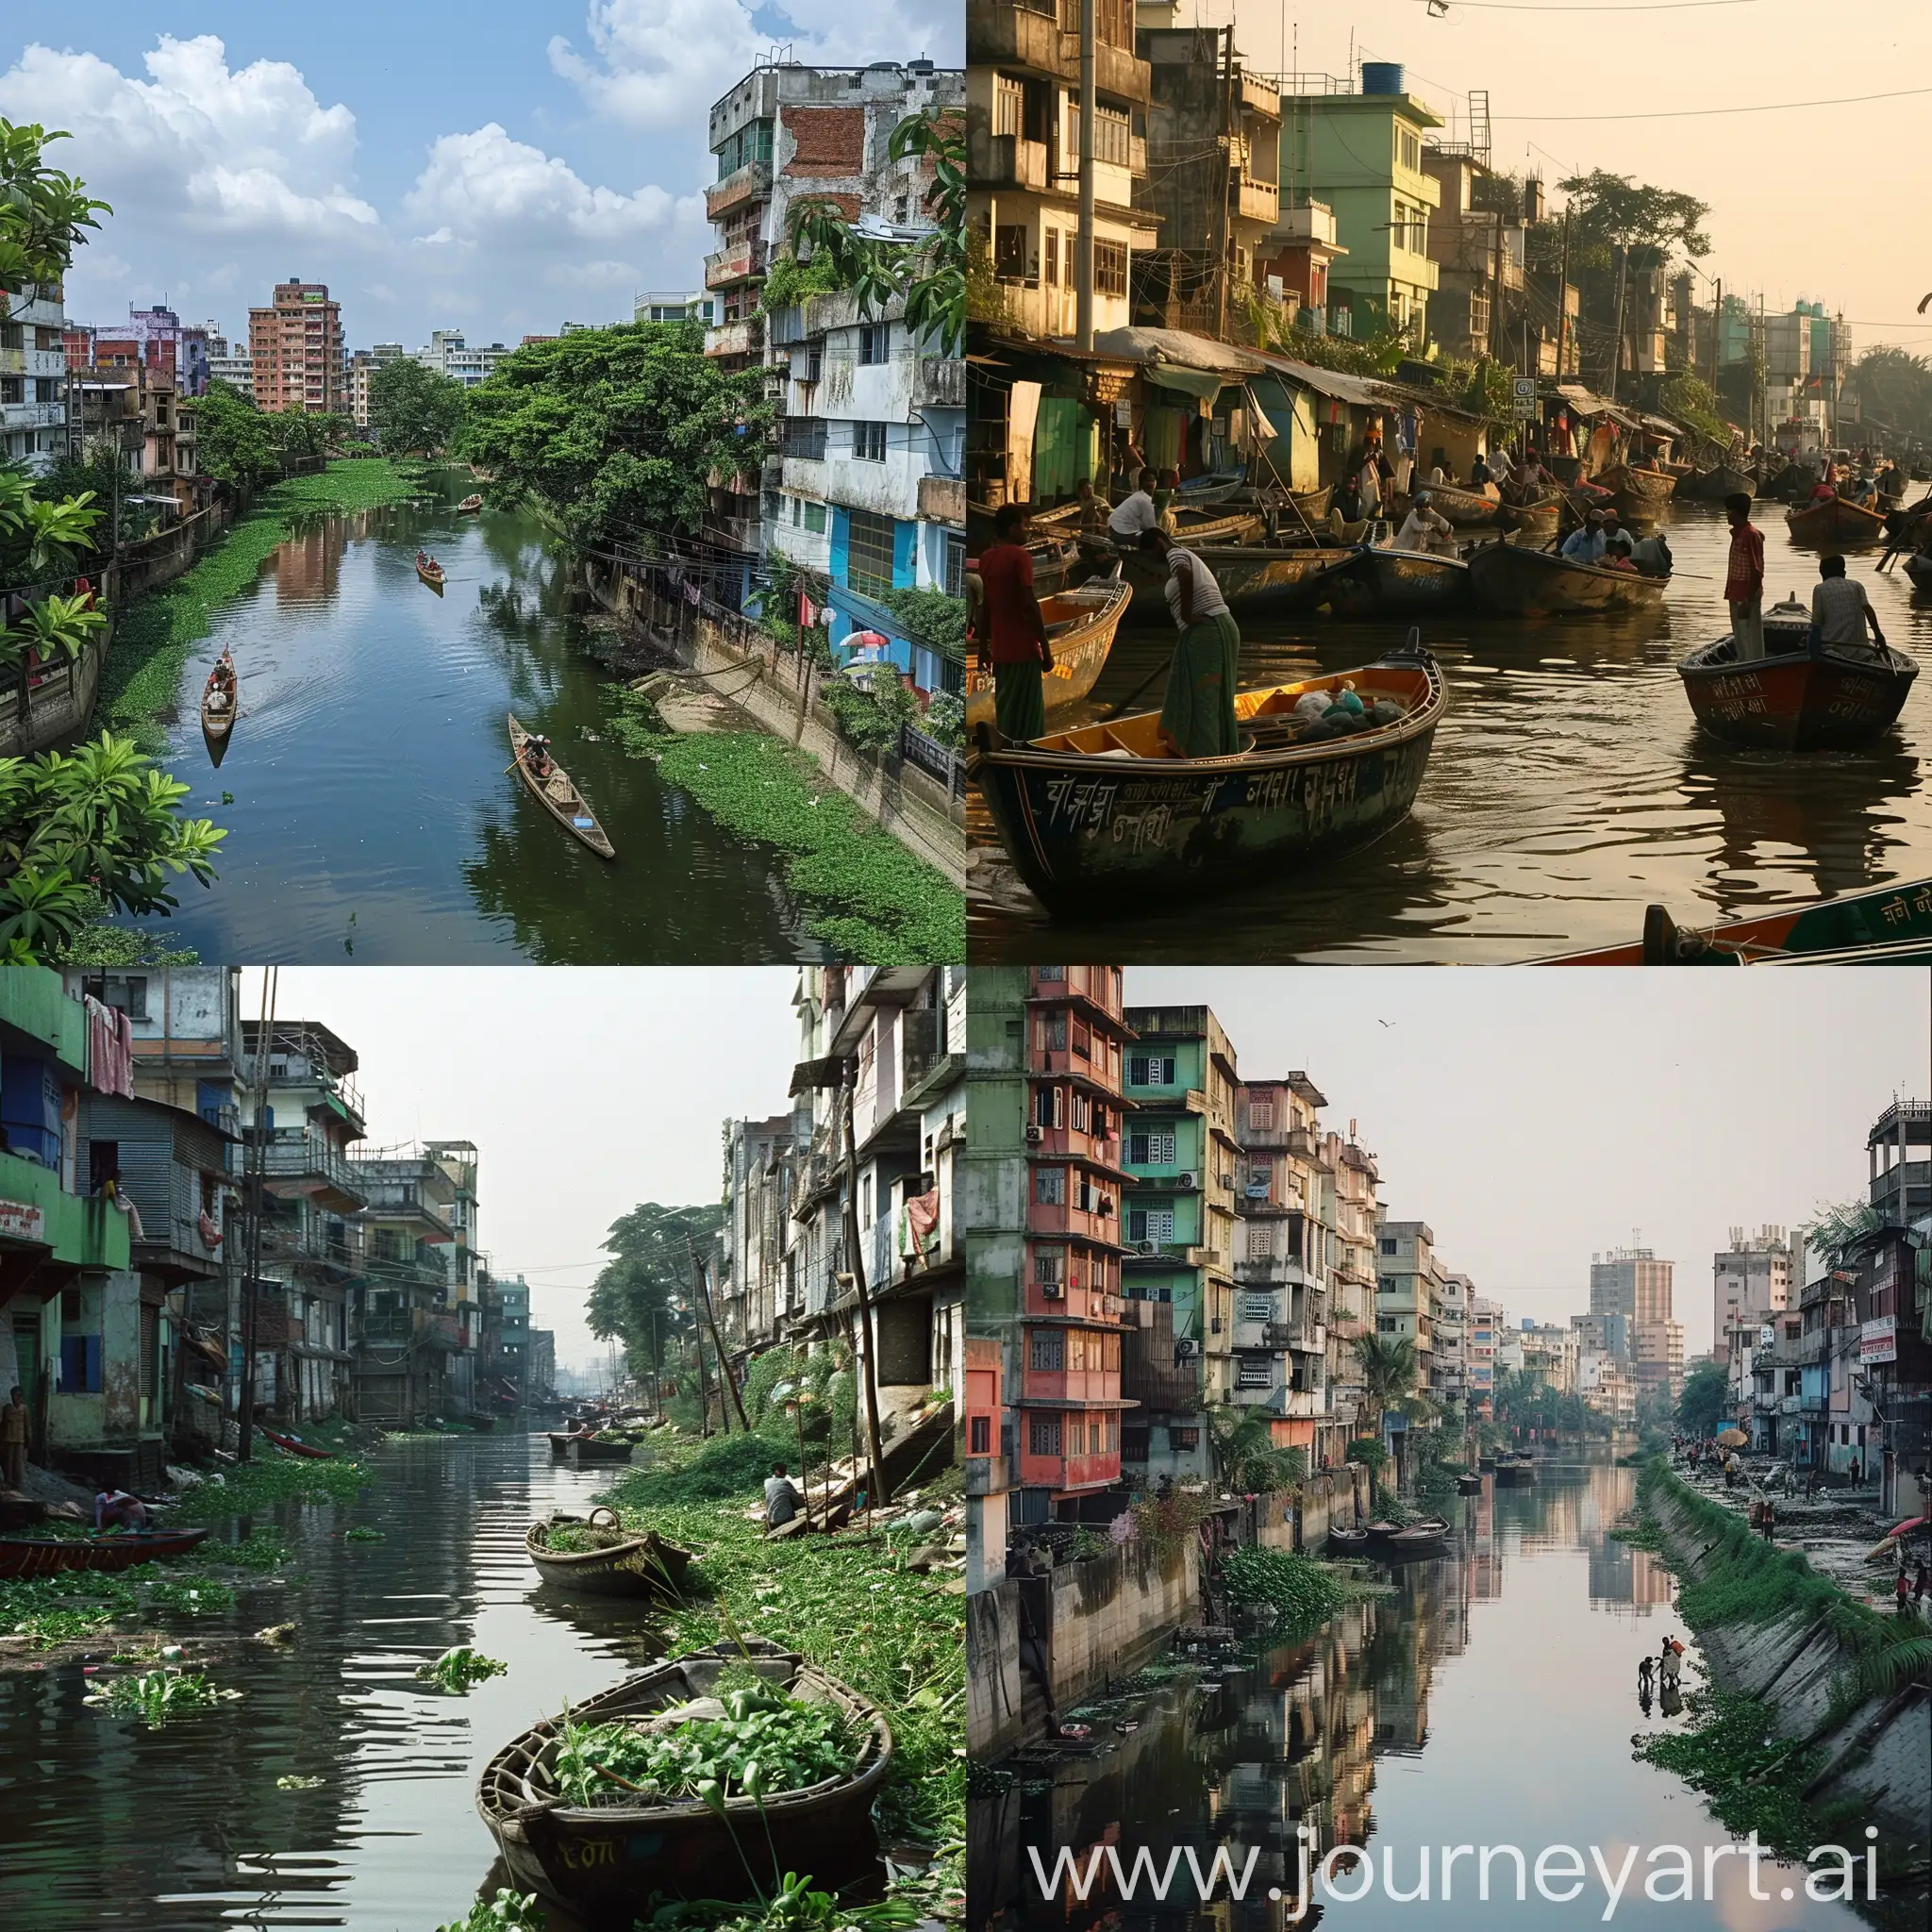 Busy-Street-Scene-in-Motijheel-Bangladesh